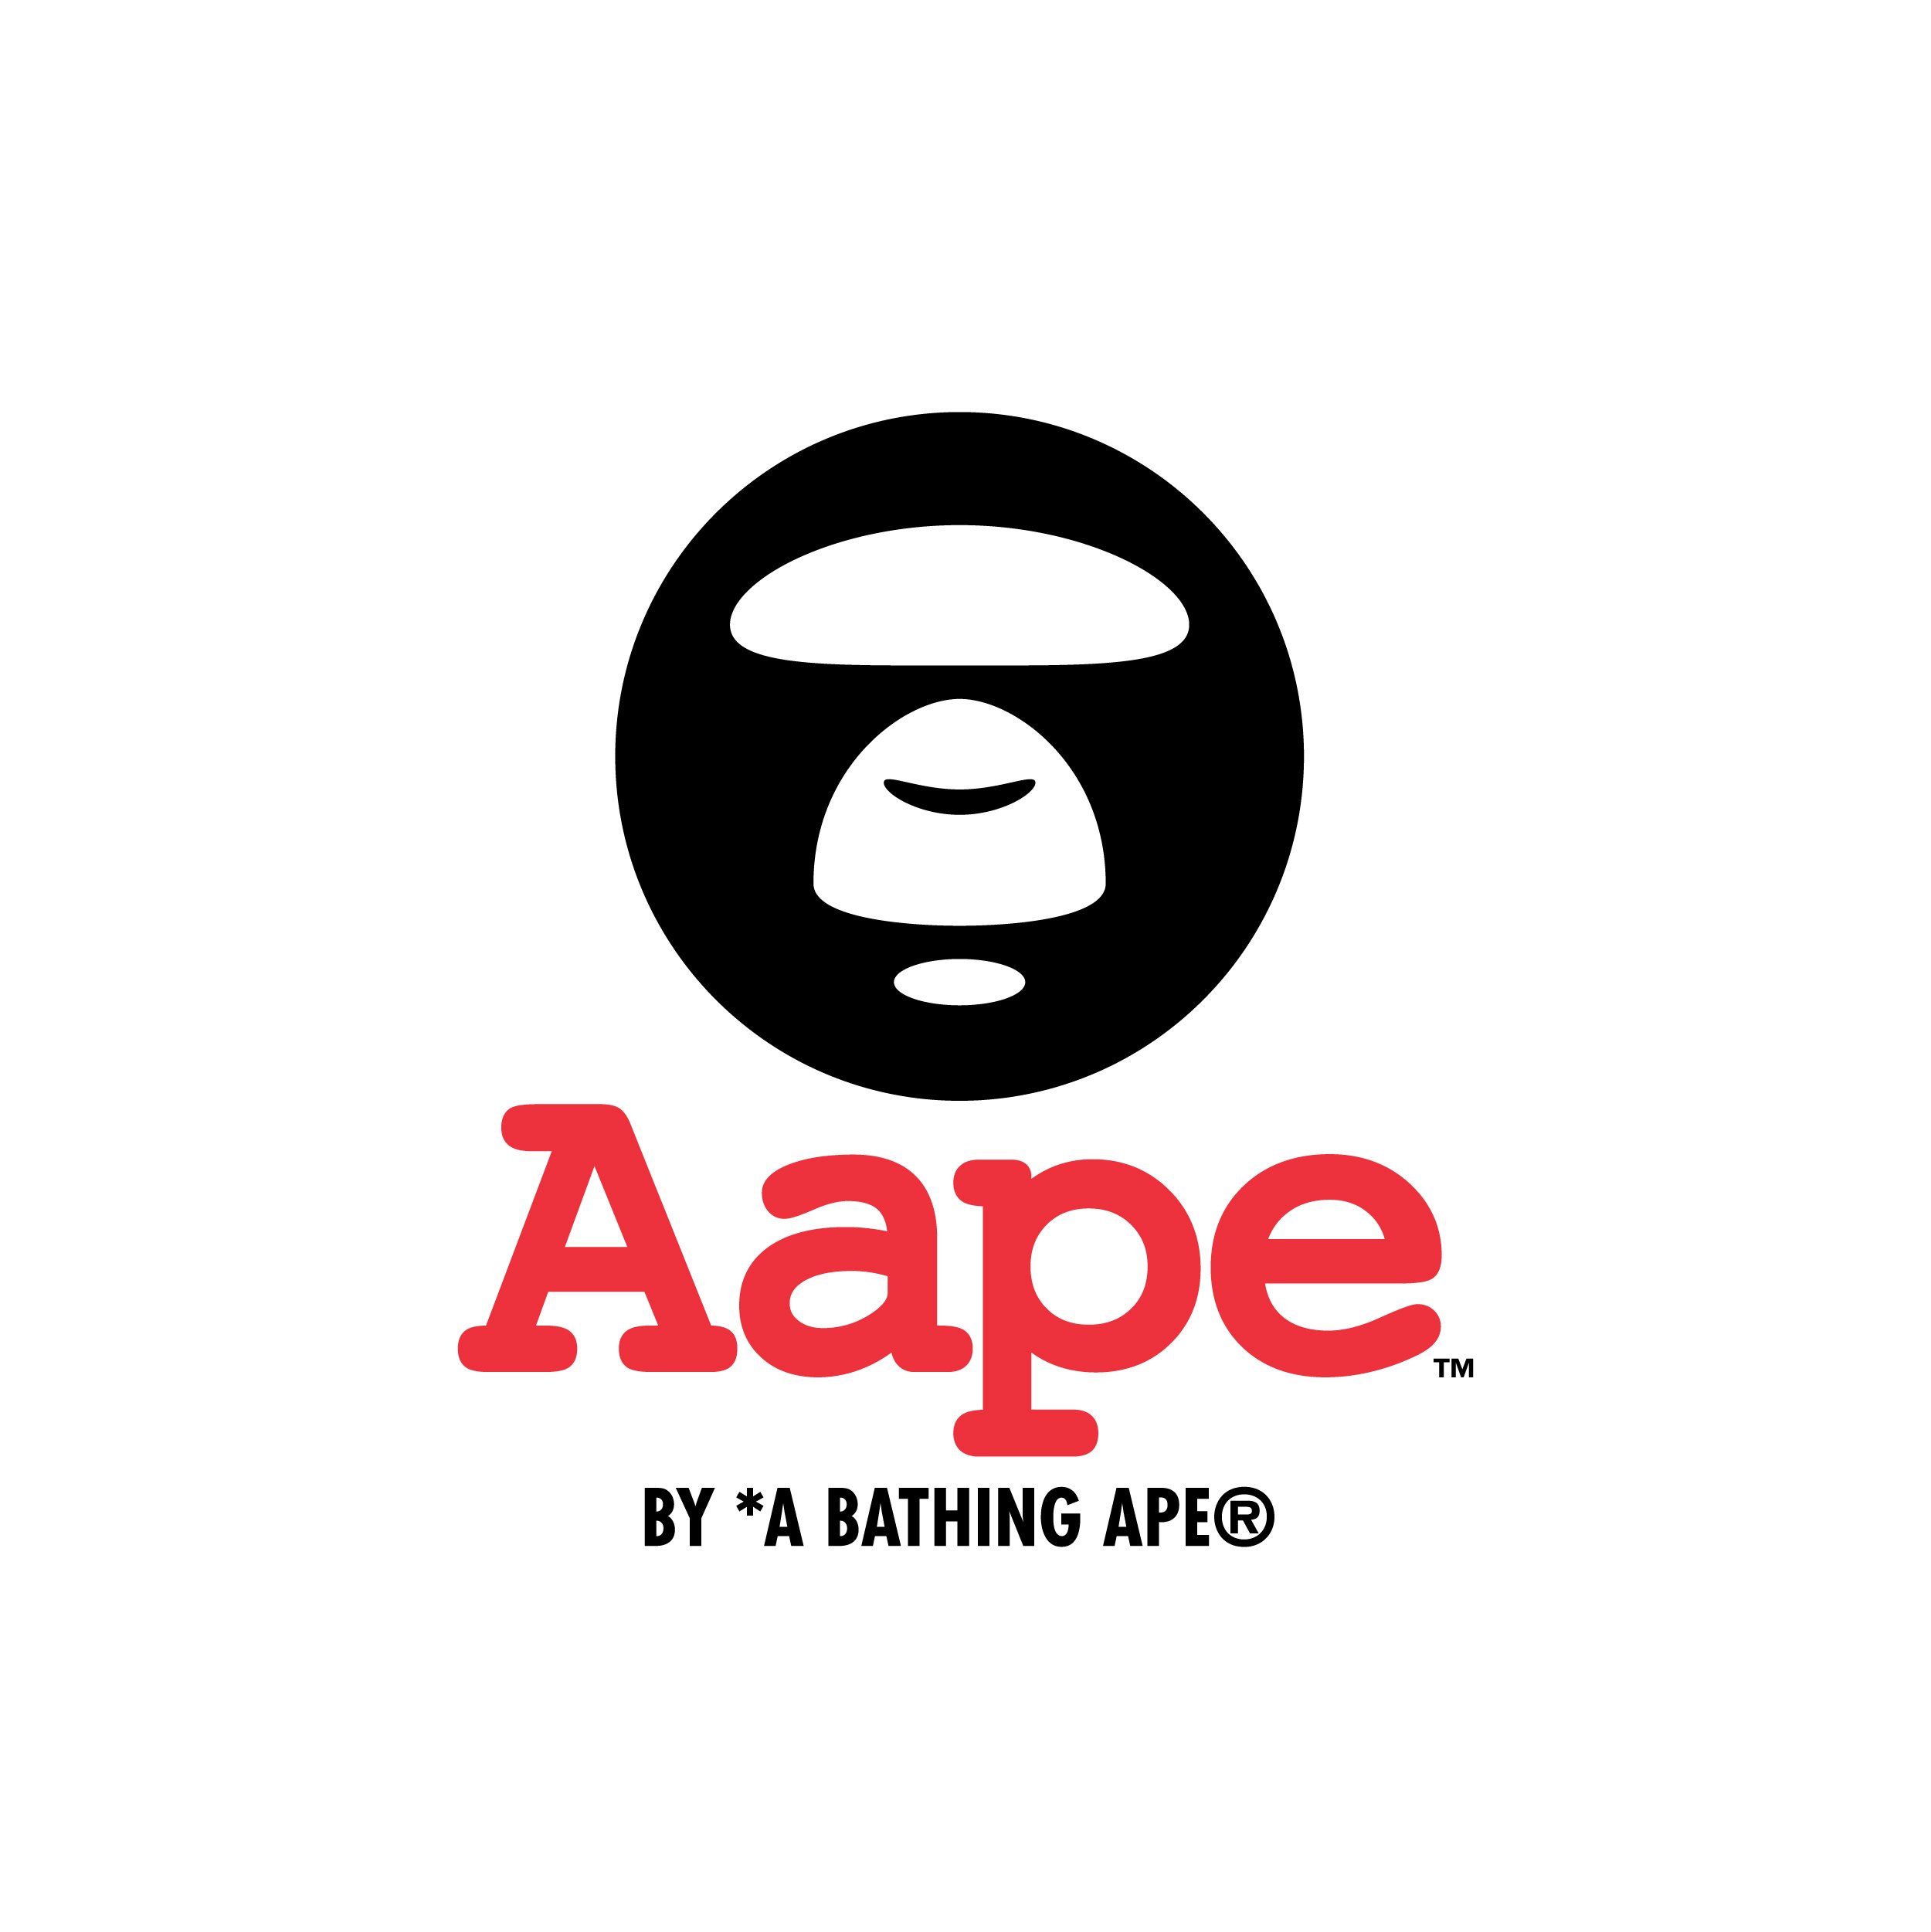 AAPE logo Item 8a_2500 x 2500_JPG Website.jpg